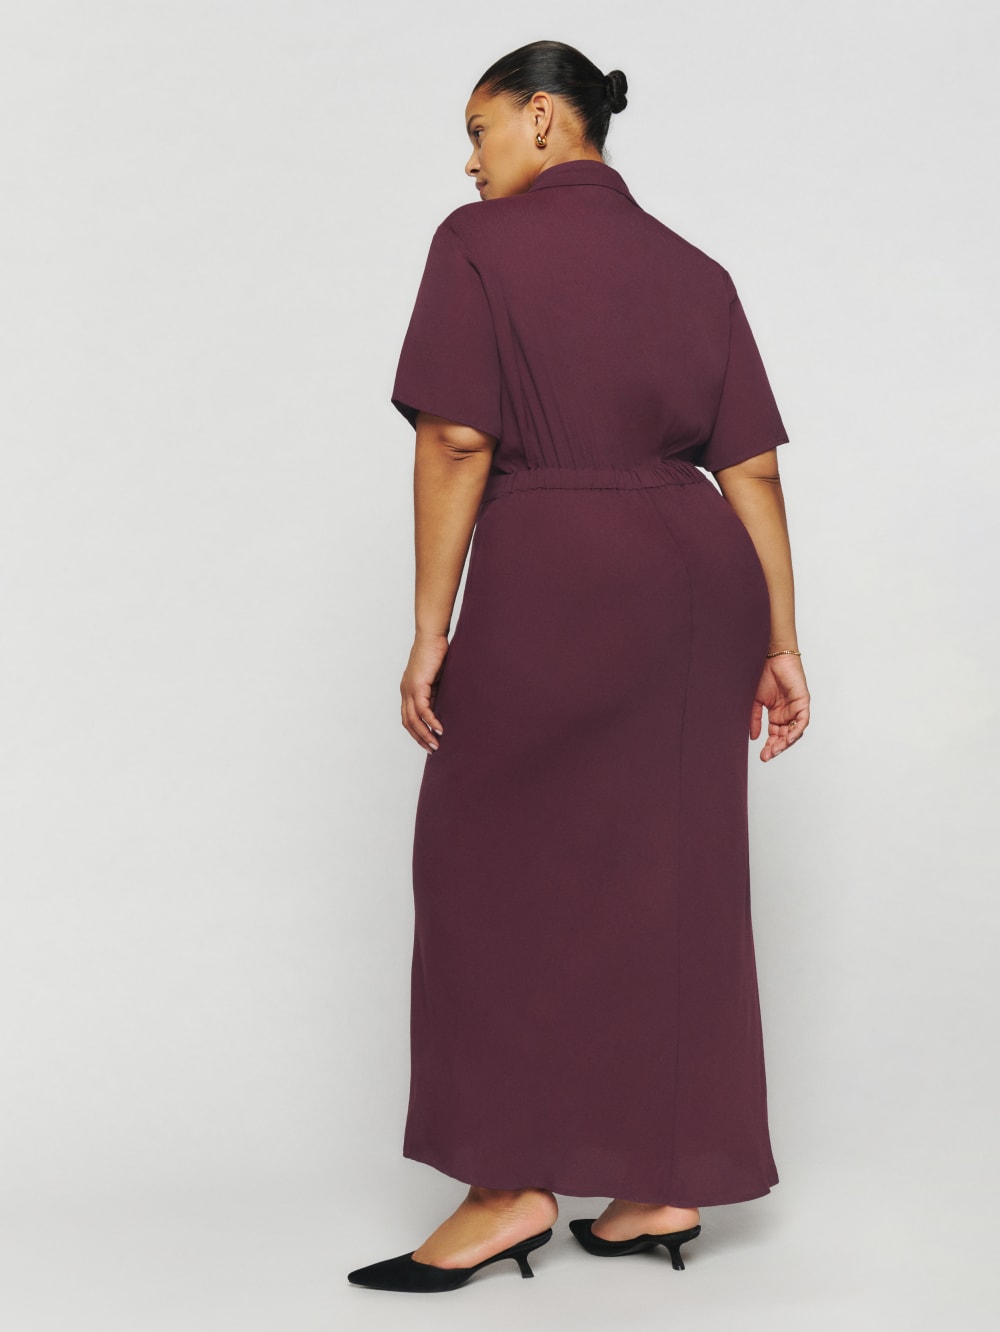 Reformation Plus Size Short Sleeve Shirt Dress